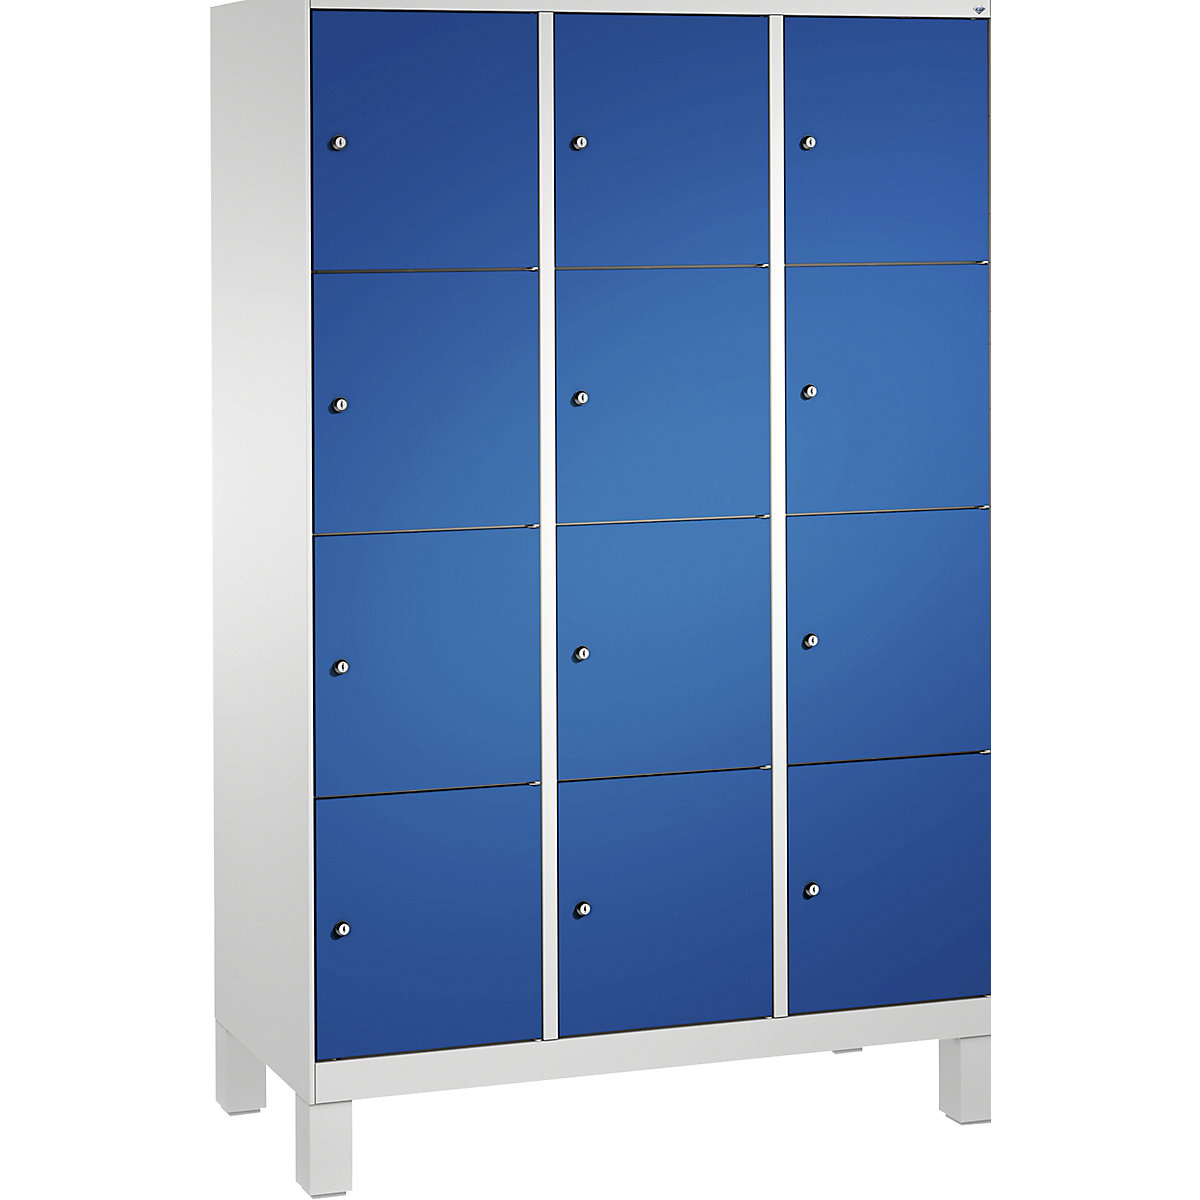 EVOLO locker unit, with feet – C+P, 3 compartments, 4 shelf compartments each, compartment width 400 mm, light grey / gentian blue-6